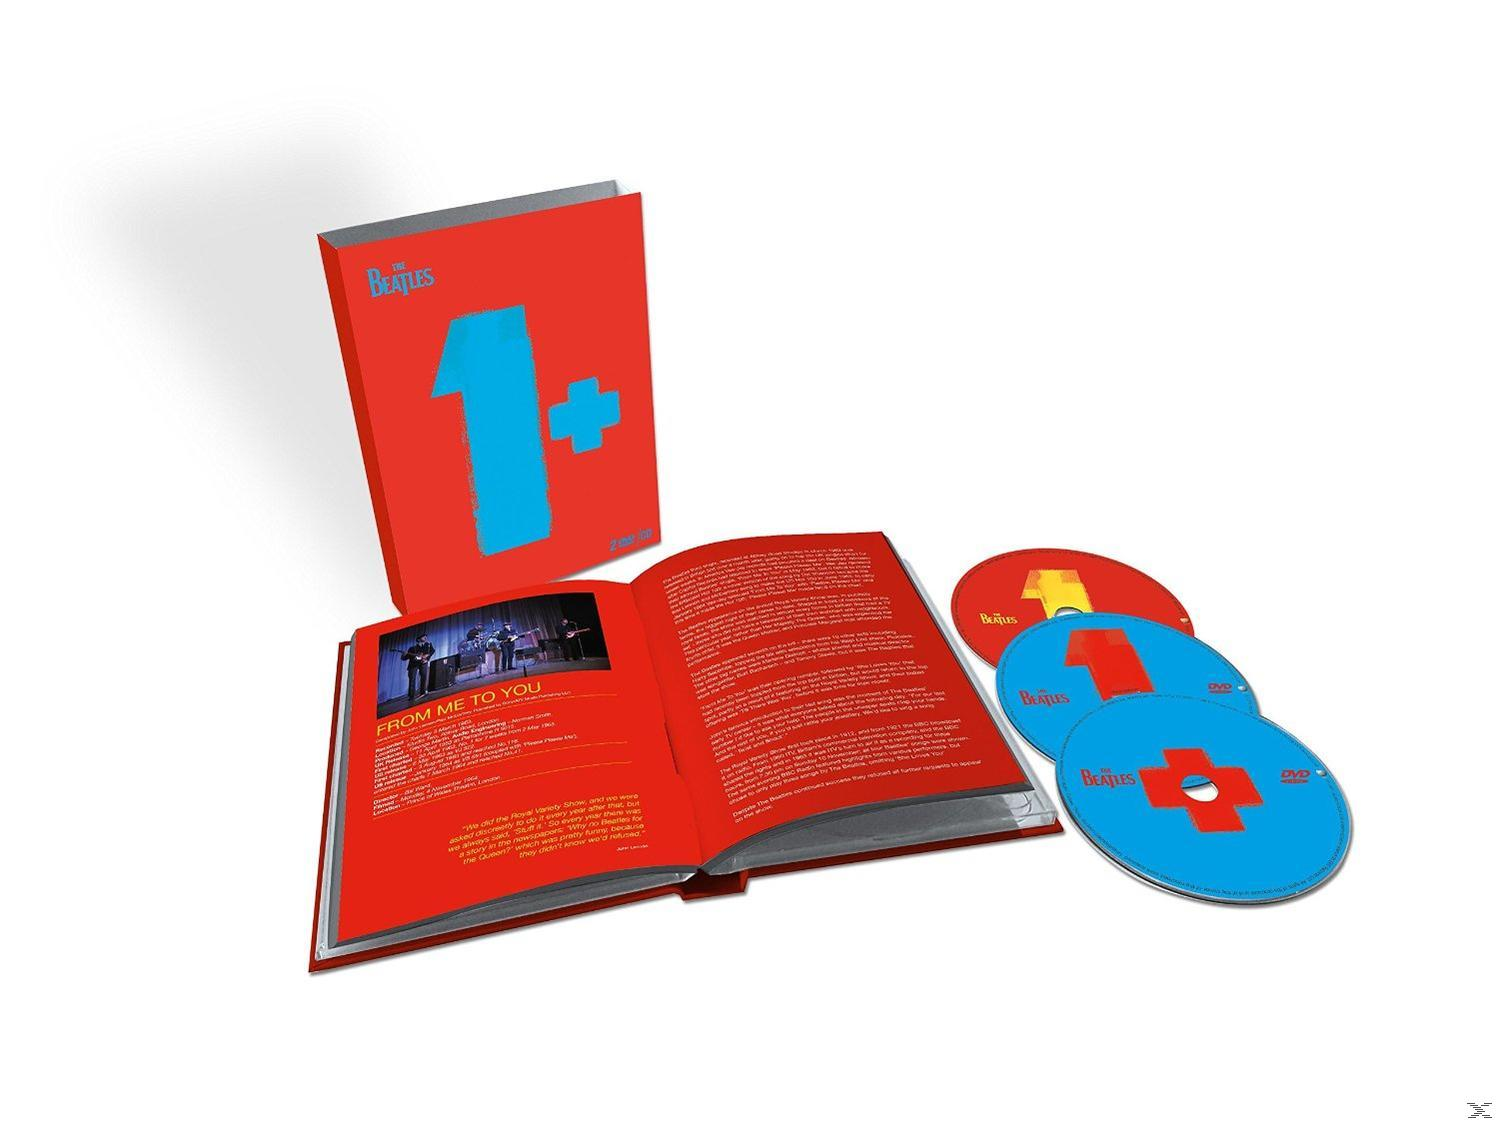 The Beatles (CD + Edition 1 (LTD - DVD Video) - Deluxe CD+2DVD)